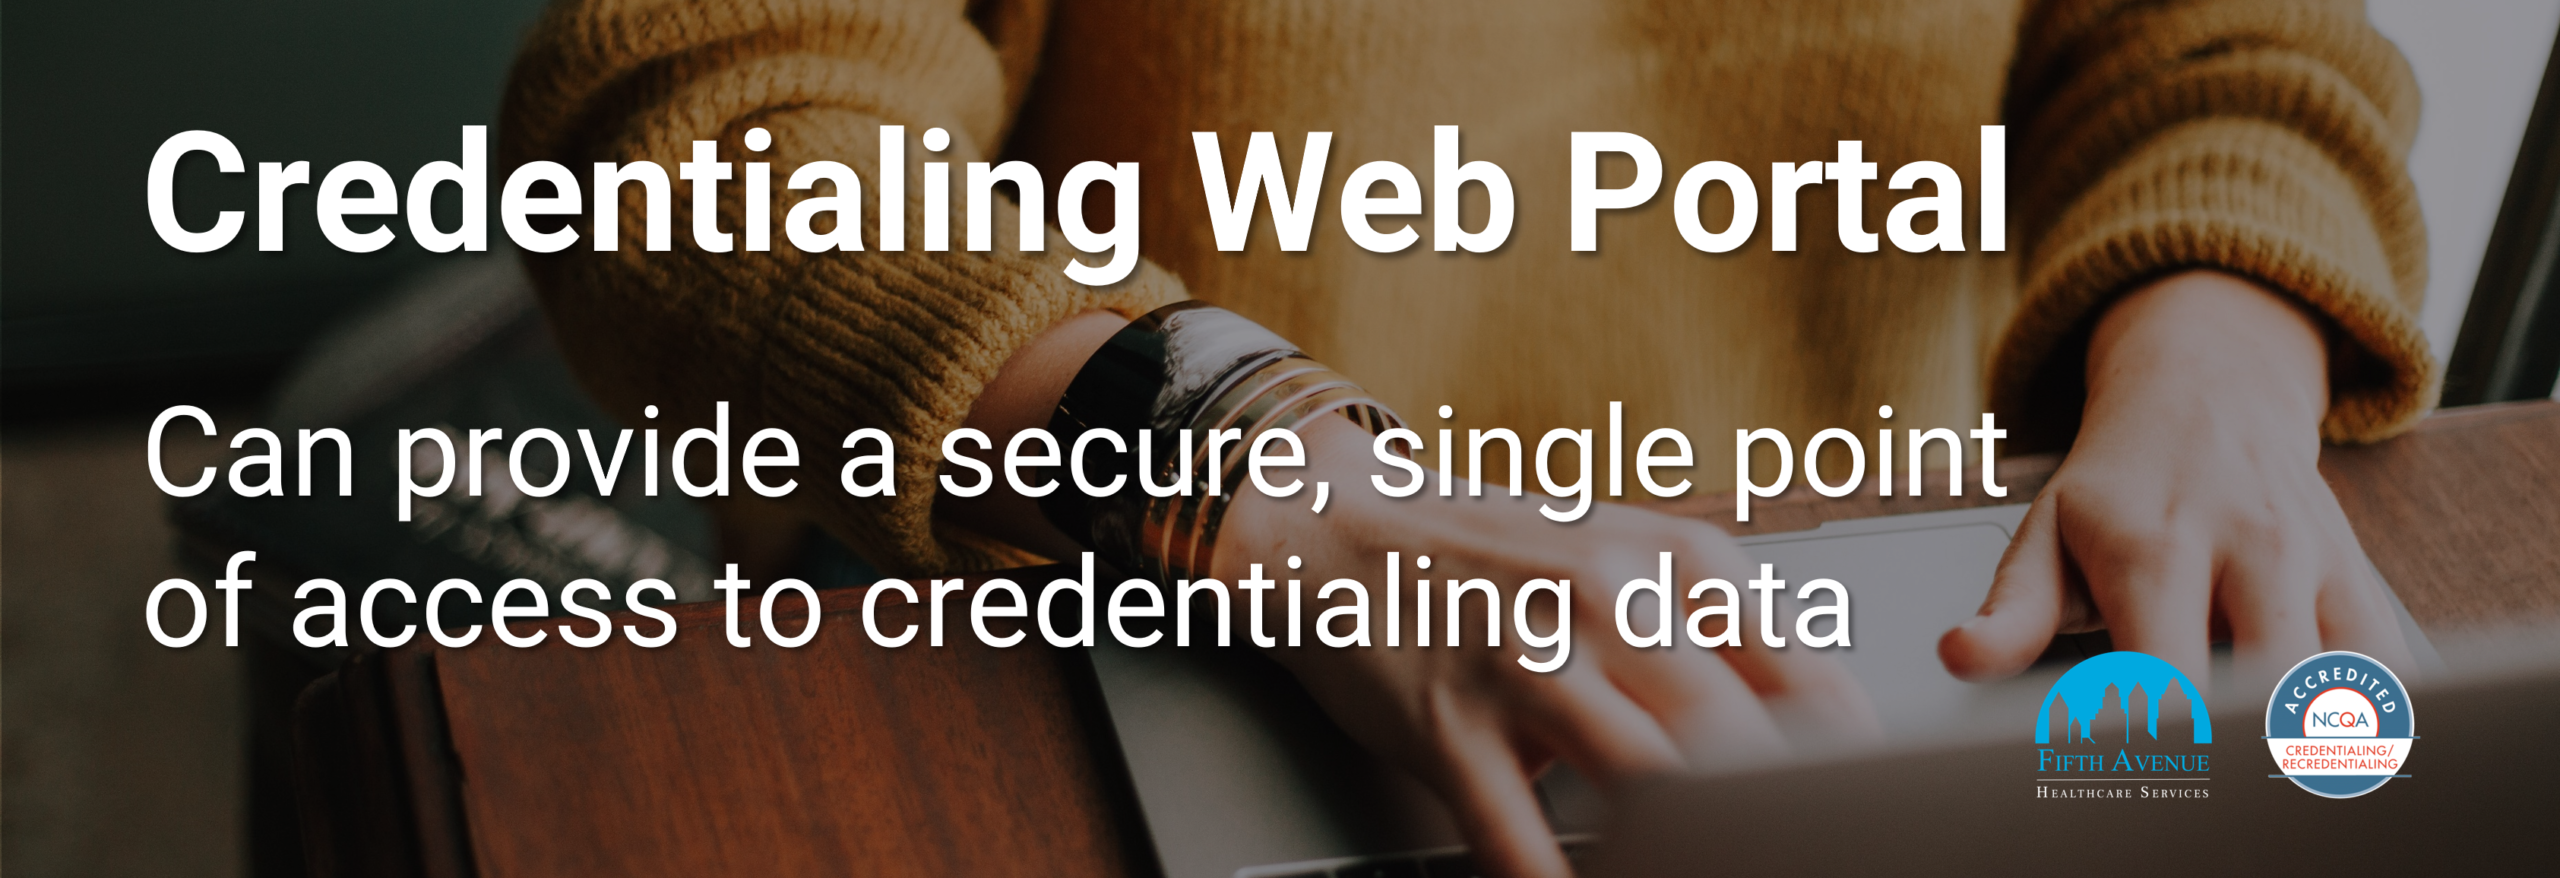 Credentialing Web Portal